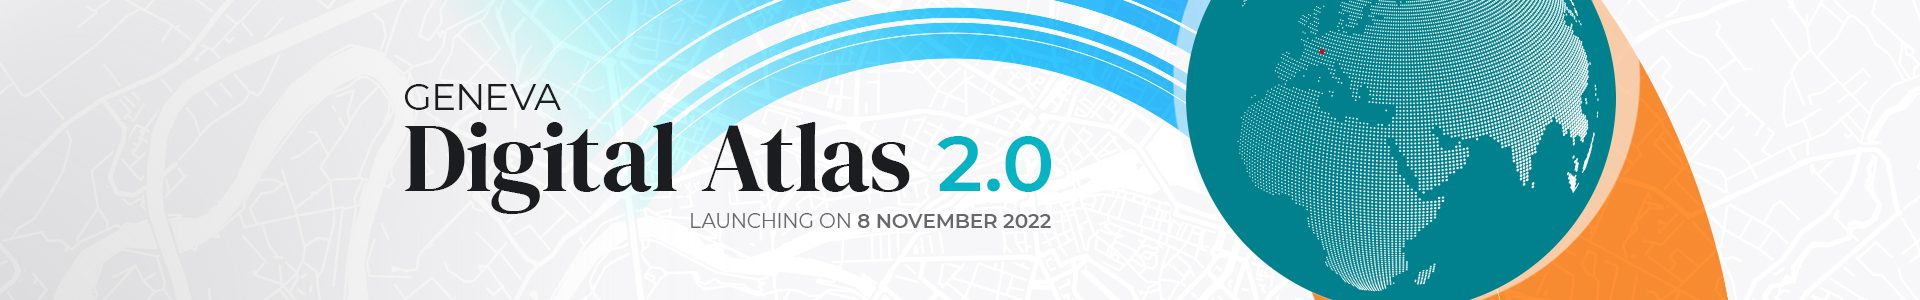 Launch of Geneva Digital Atlas